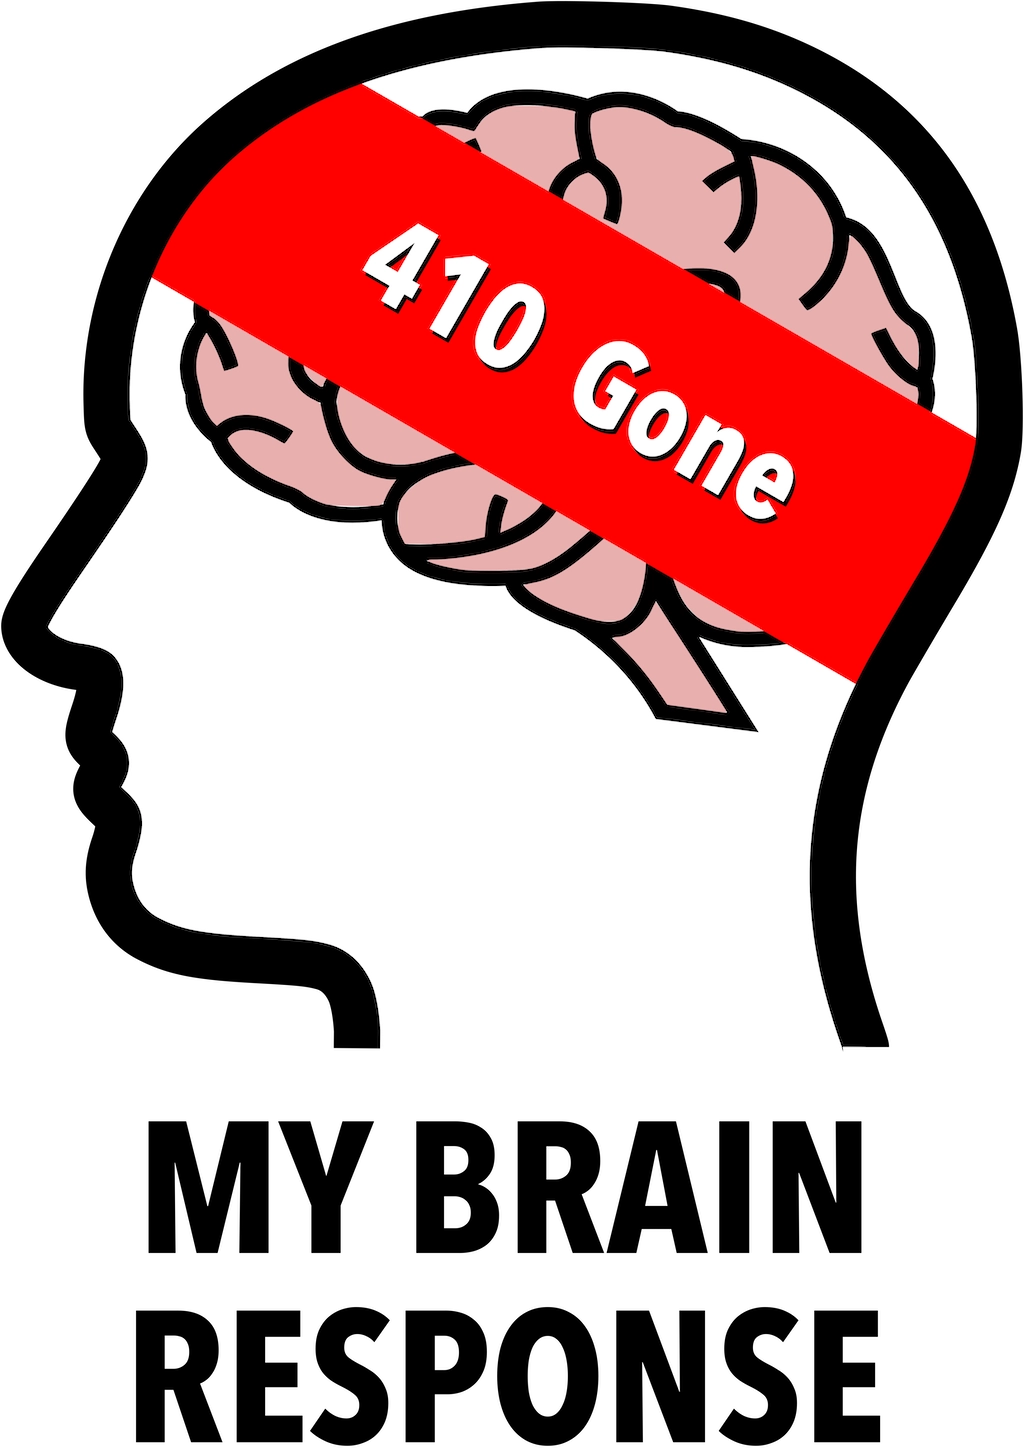 My Brain Response: 410 Gone